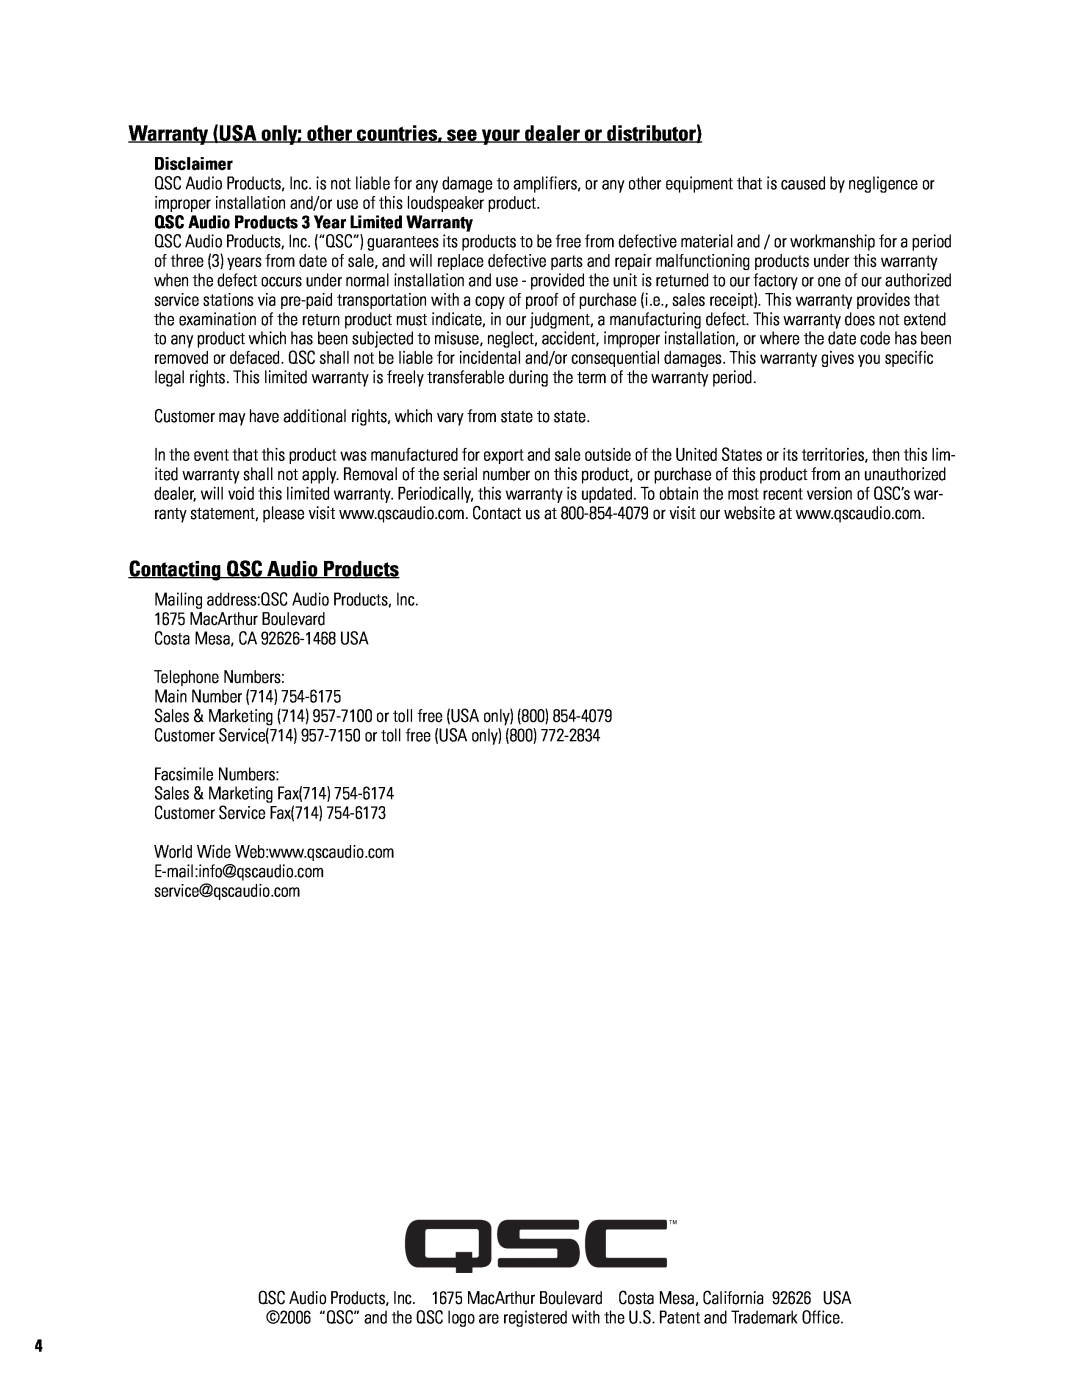 QSC Audio SC-312X specifications Contacting QSC Audio Products, Disclaimer, QSC Audio Products 3 Year Limited Warranty 